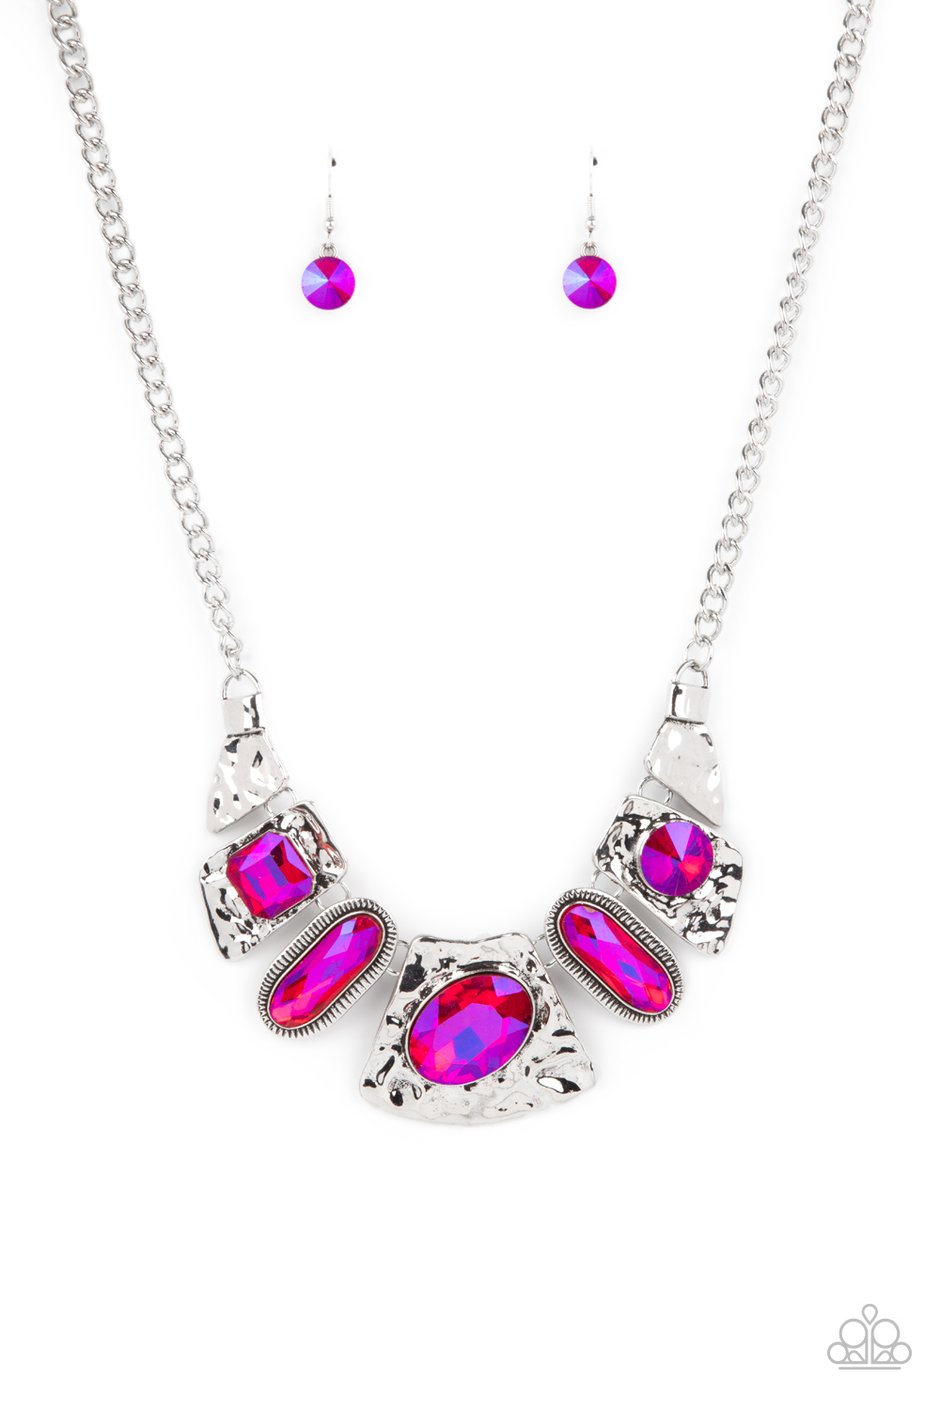 Futuristic Fashionista Necklace - Pink